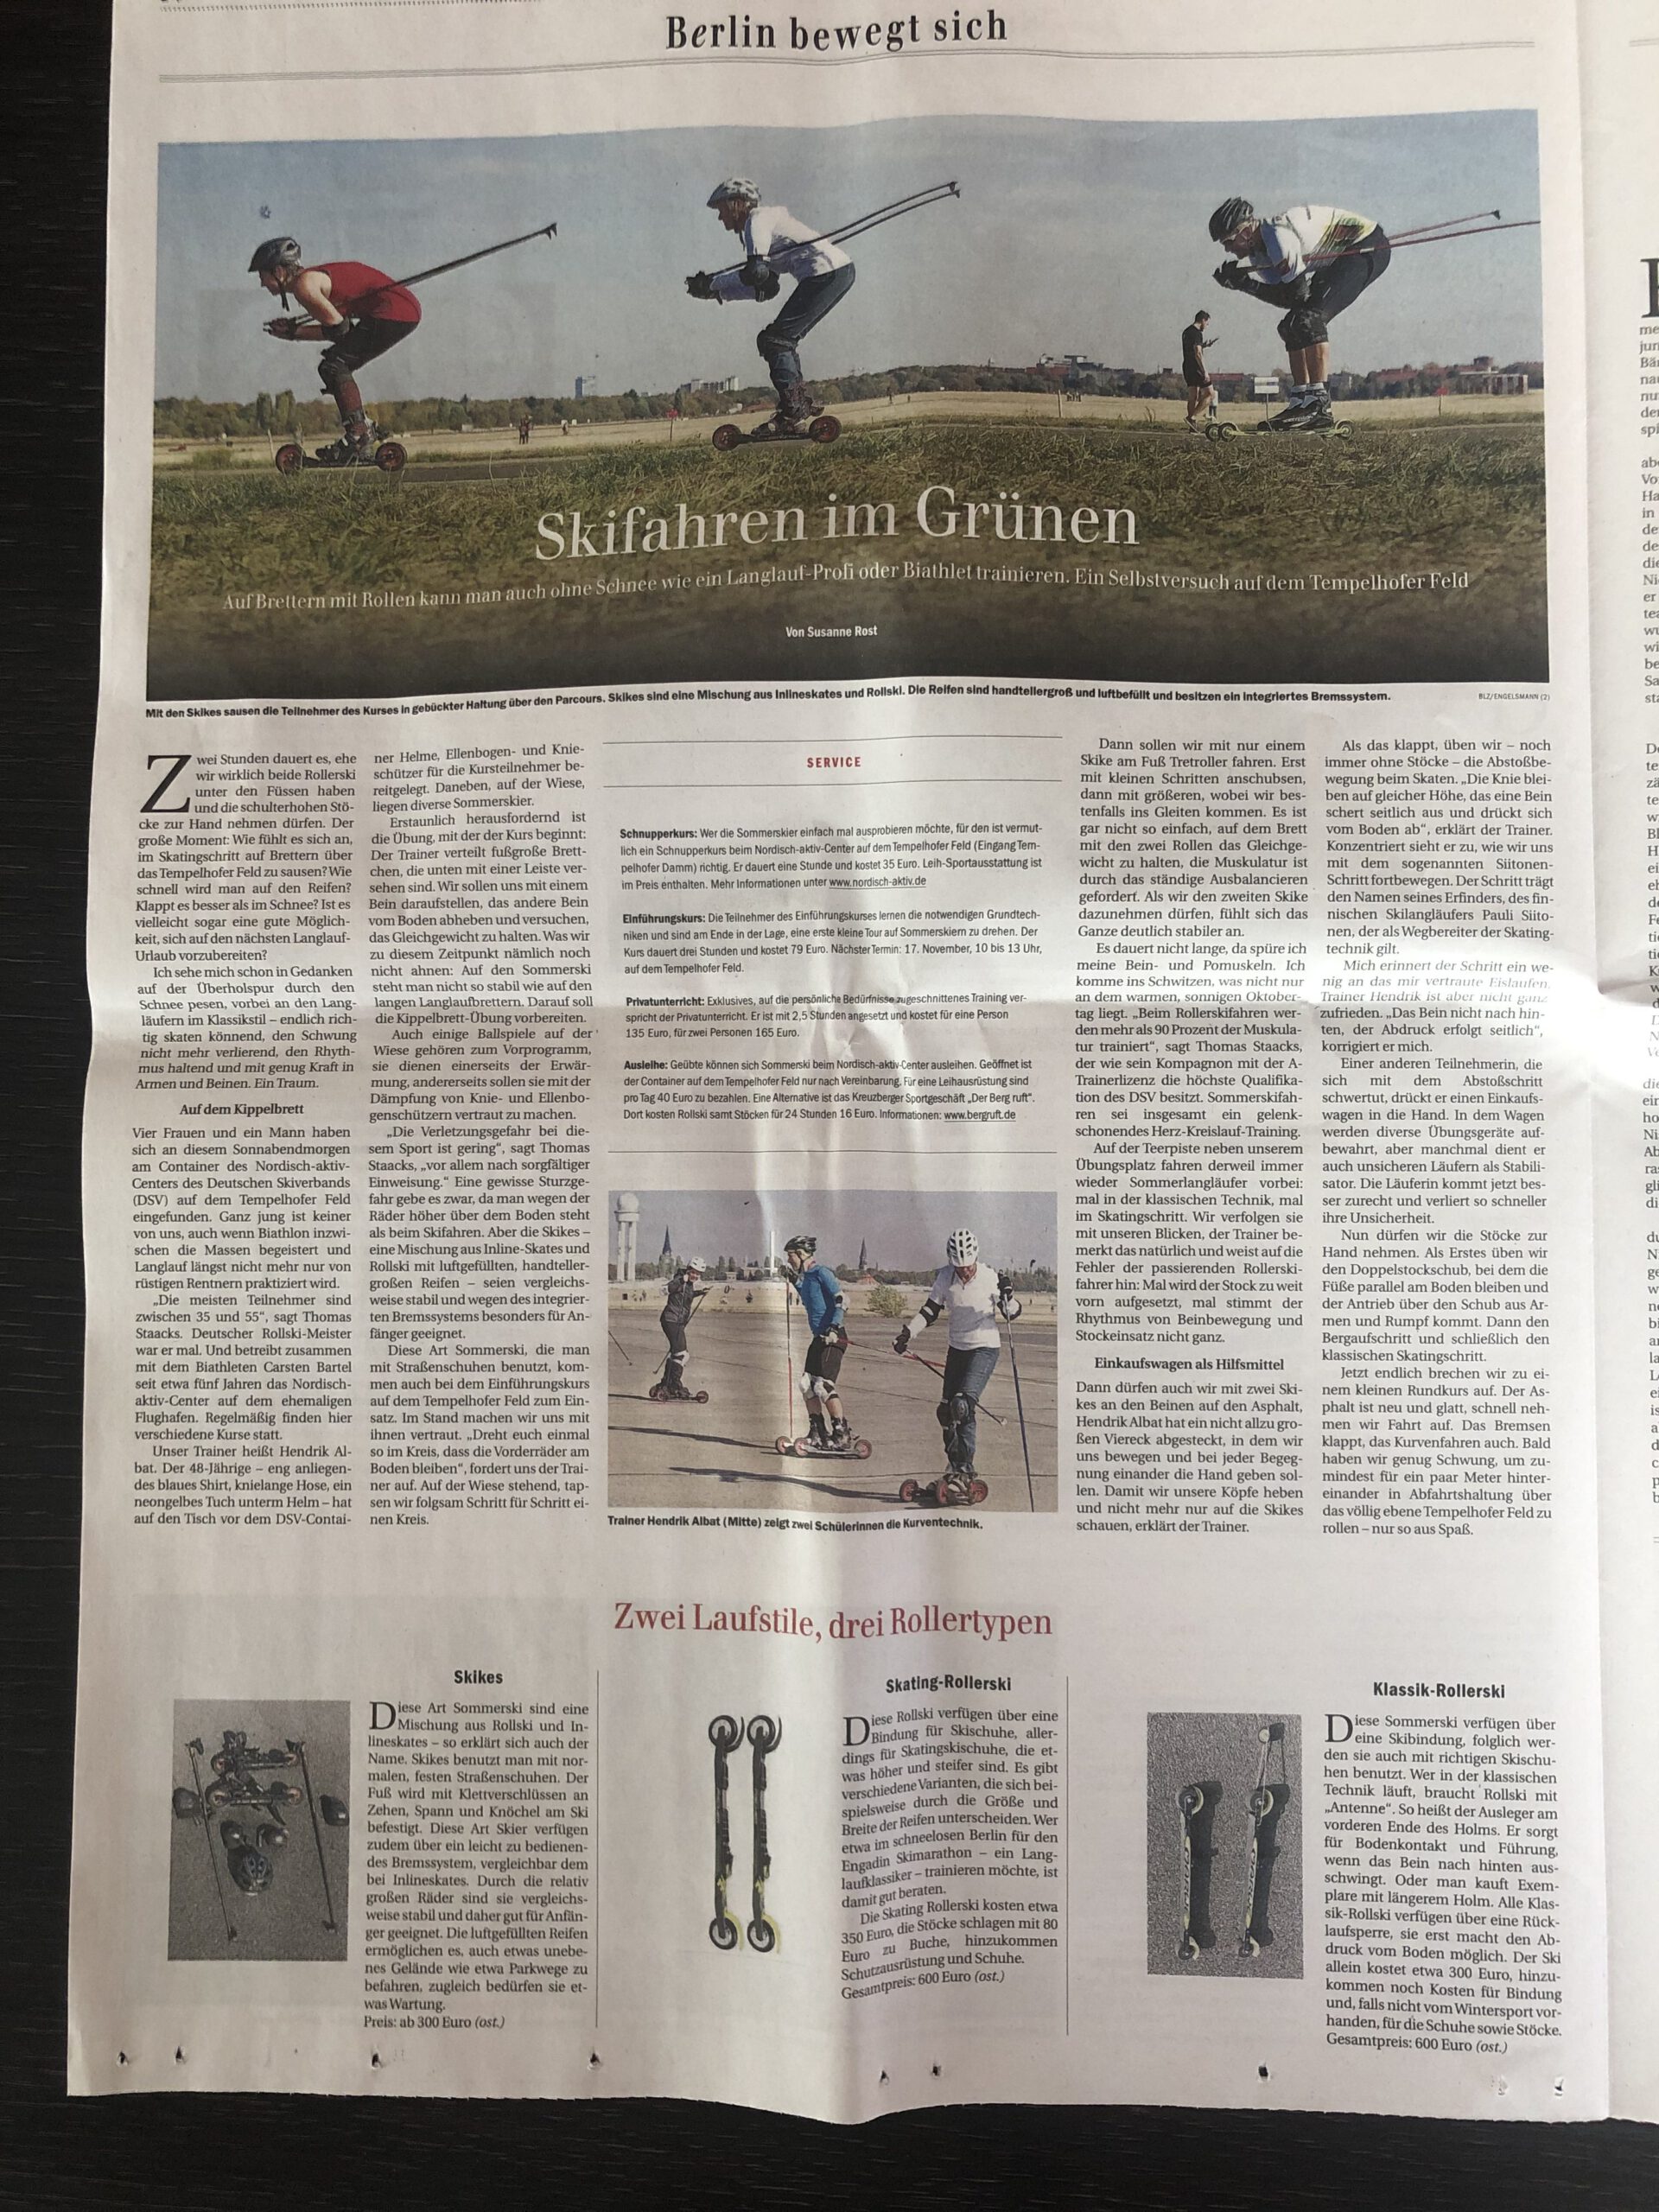 nordisch aktiv Berliner Zeitung Skiroller Cross skating